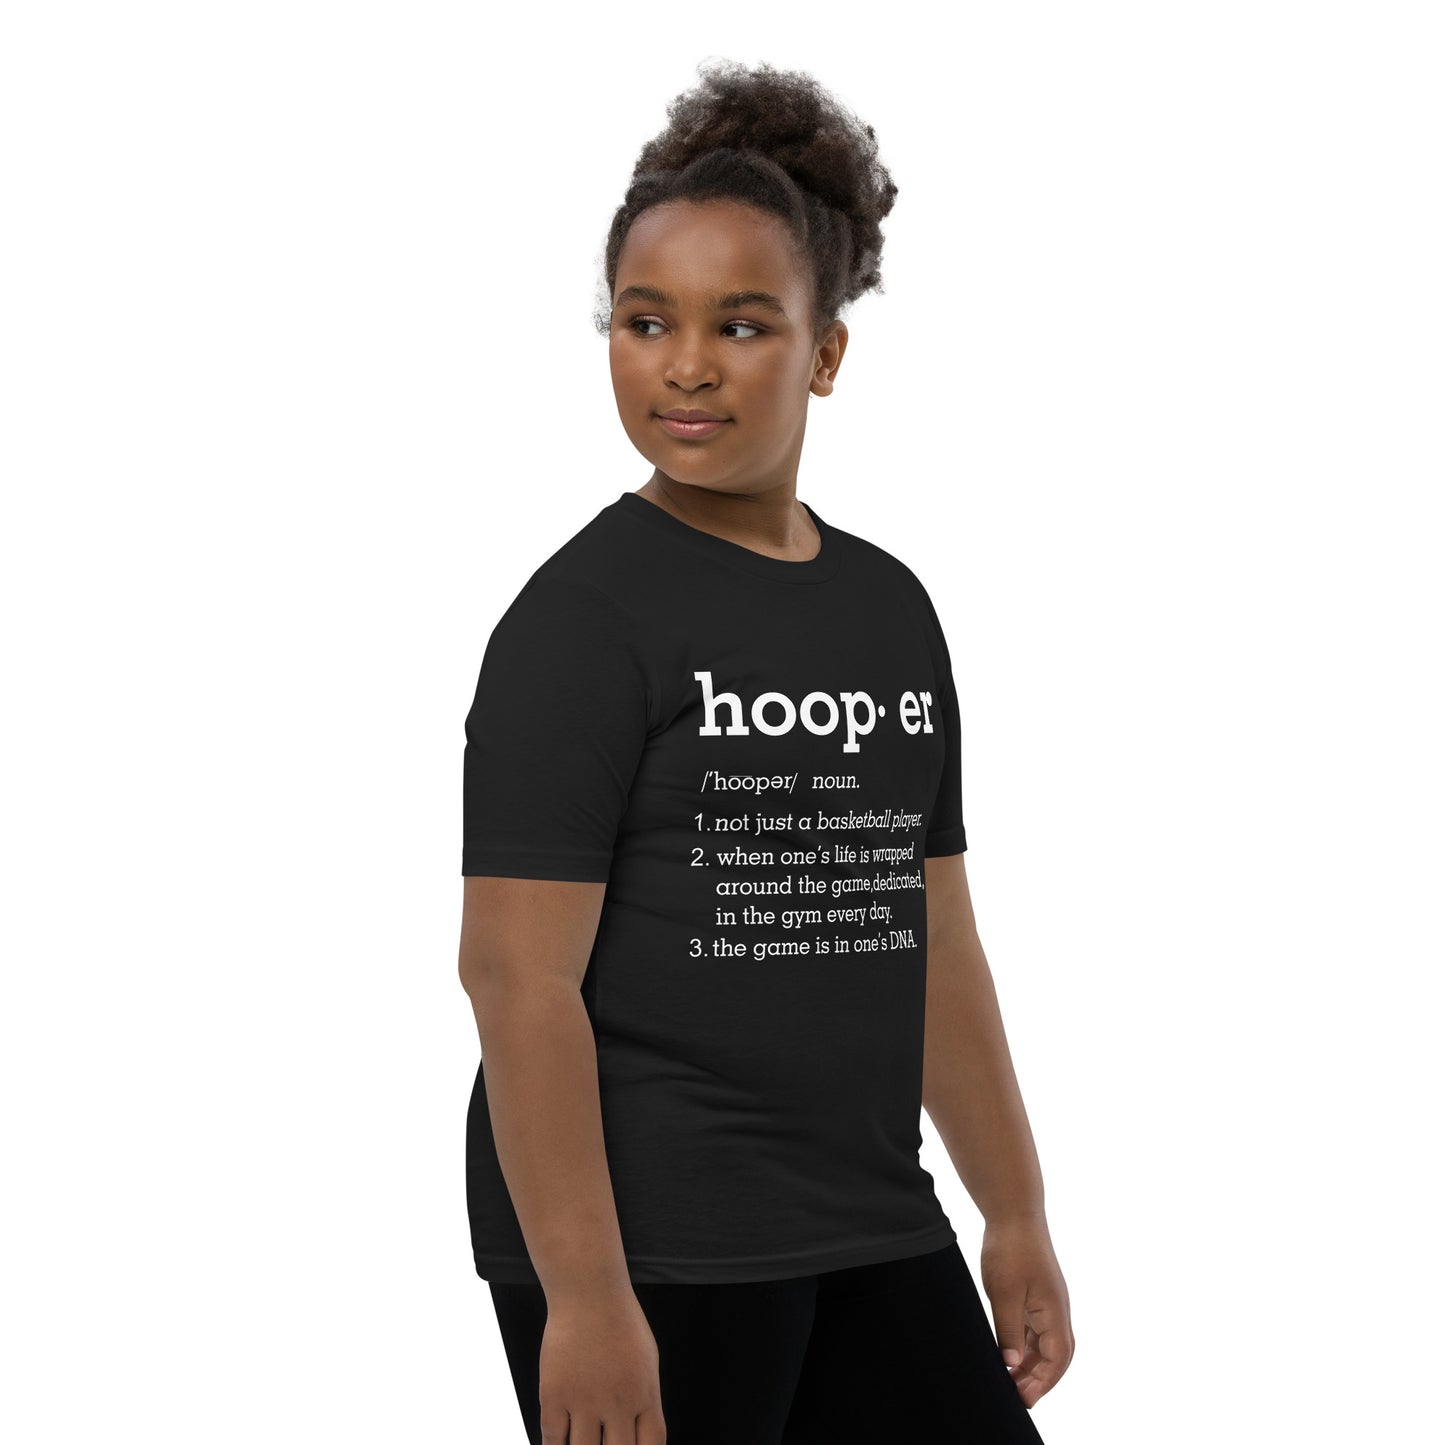 Hooper definition Youth Short Sleeve T-Shirt-Stylish and Versatile Children's Tee